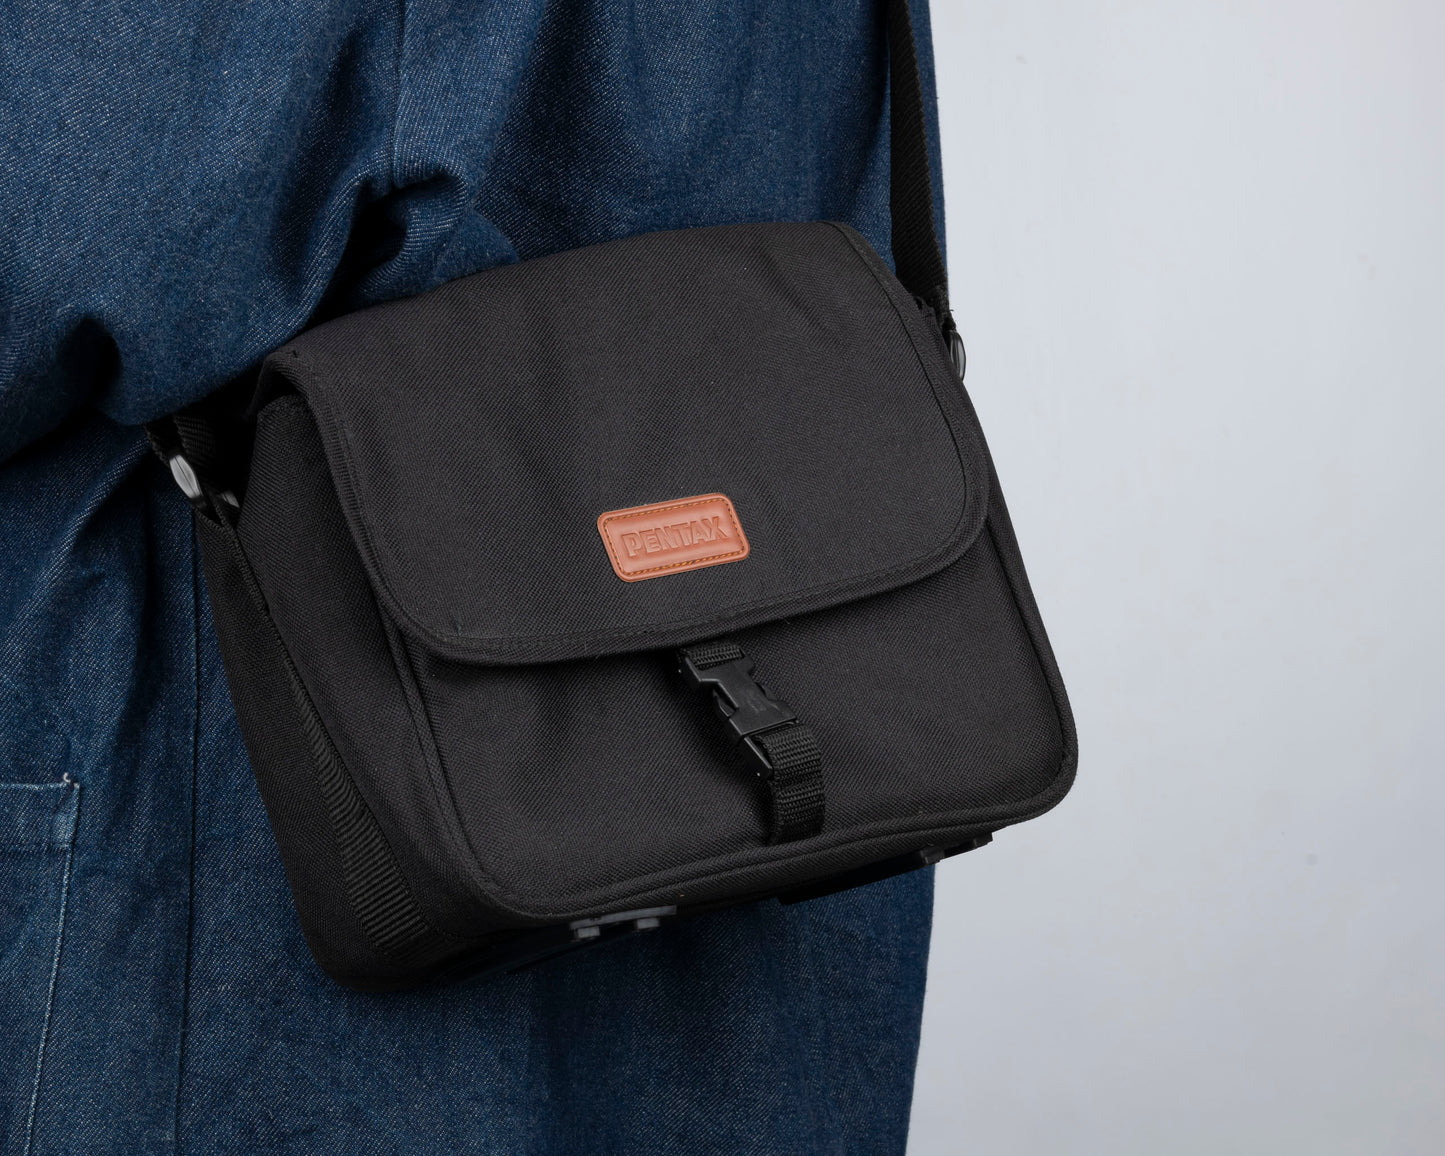 Pentax black mid-sized camera bag